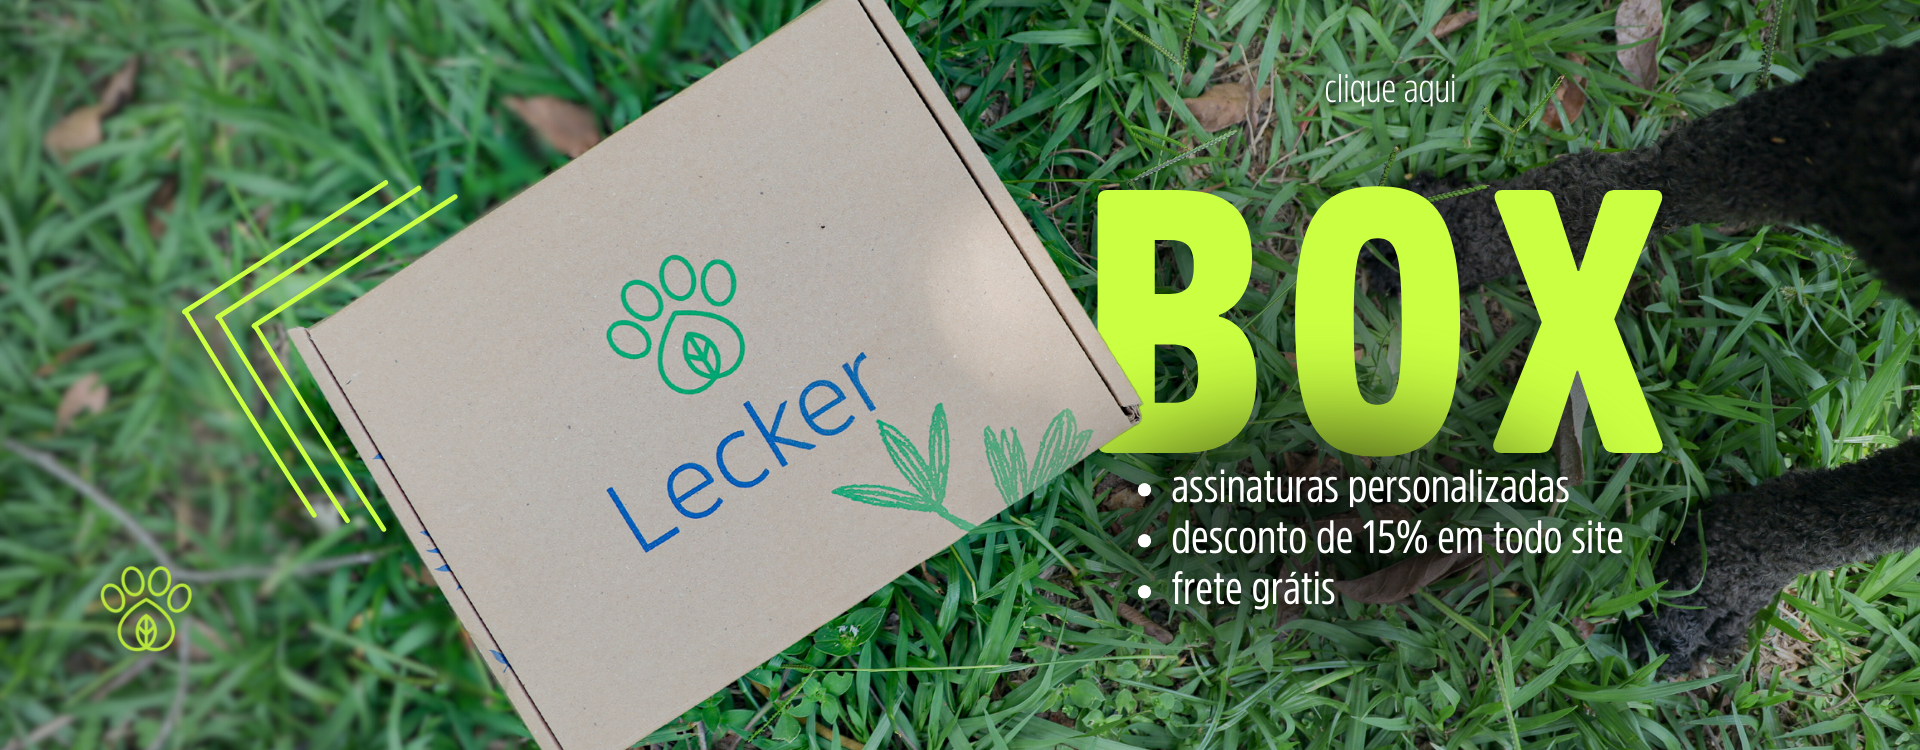 lecker box